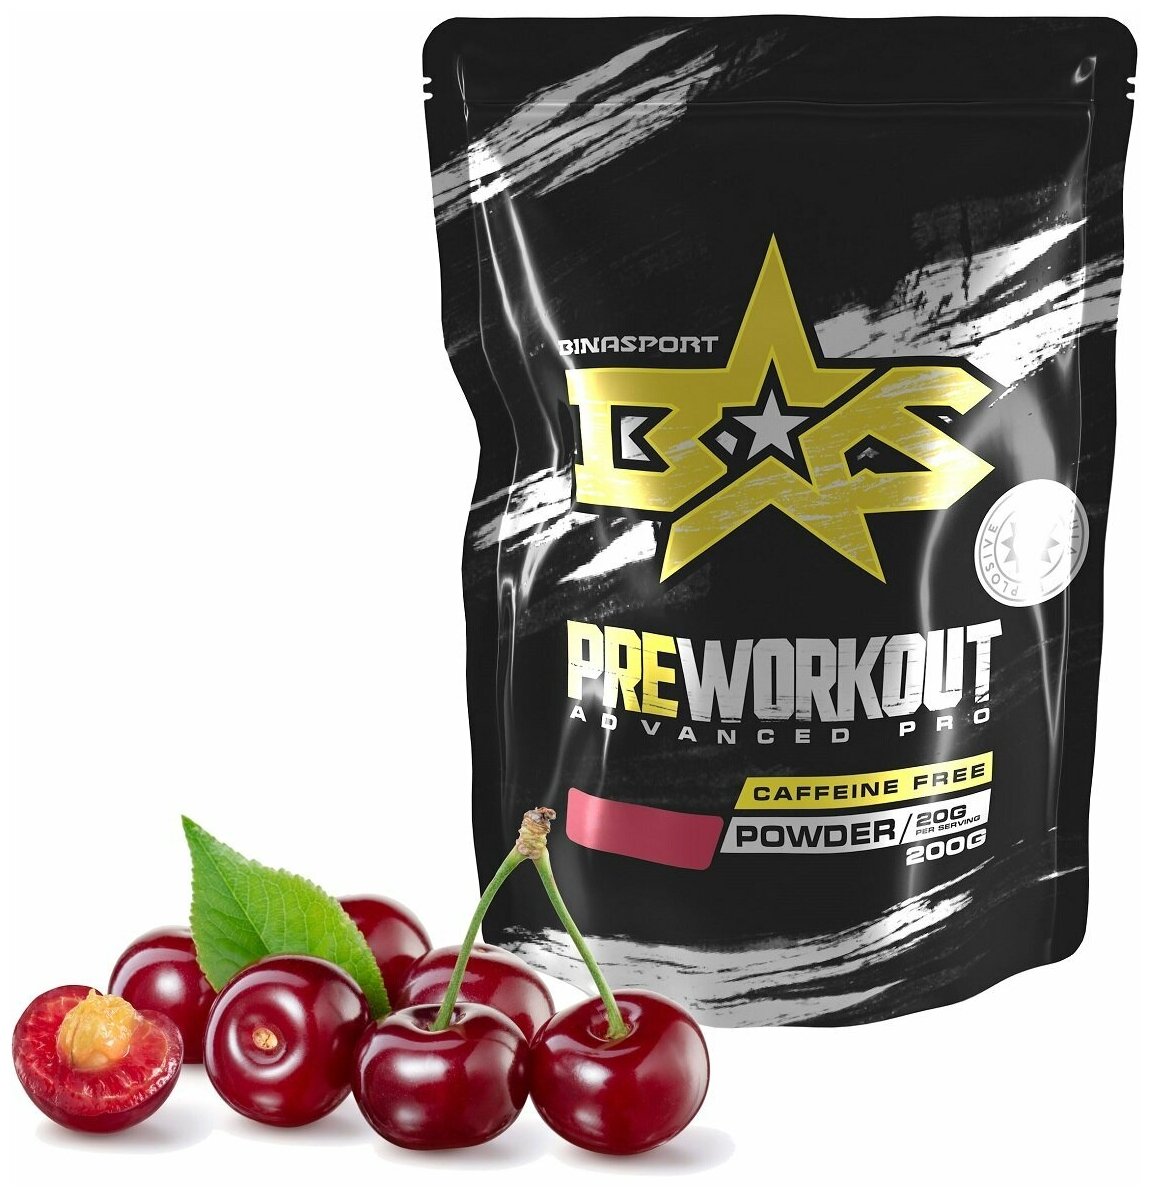 (2 УП х 200ГР) Предтренировочный комплекс Binasport "Preworkout Advanced Pro caffeine free" (без кофеина) порошок 400 г со вкусом вишни